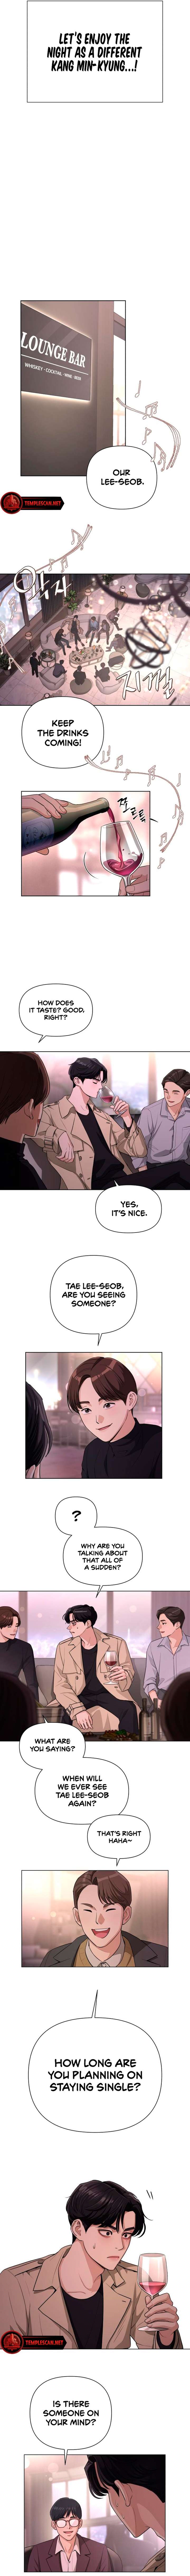 Lee Seob’s love chapter 7